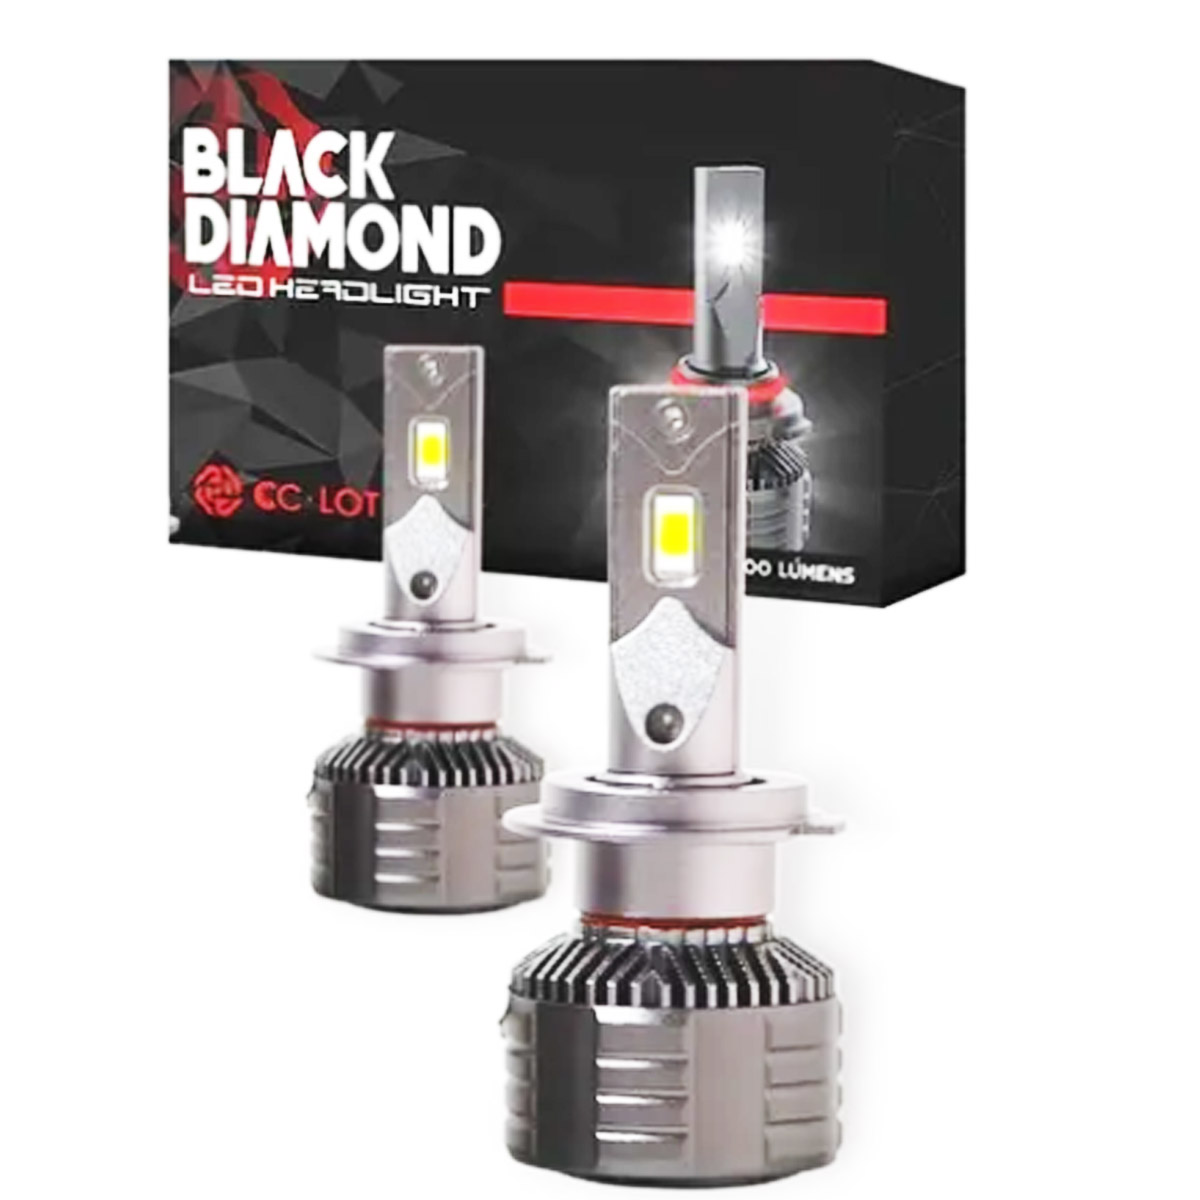 Par de Lâmpada Headlight Led CC-LOT Black Diamond H3 9000 Lúmens JR8